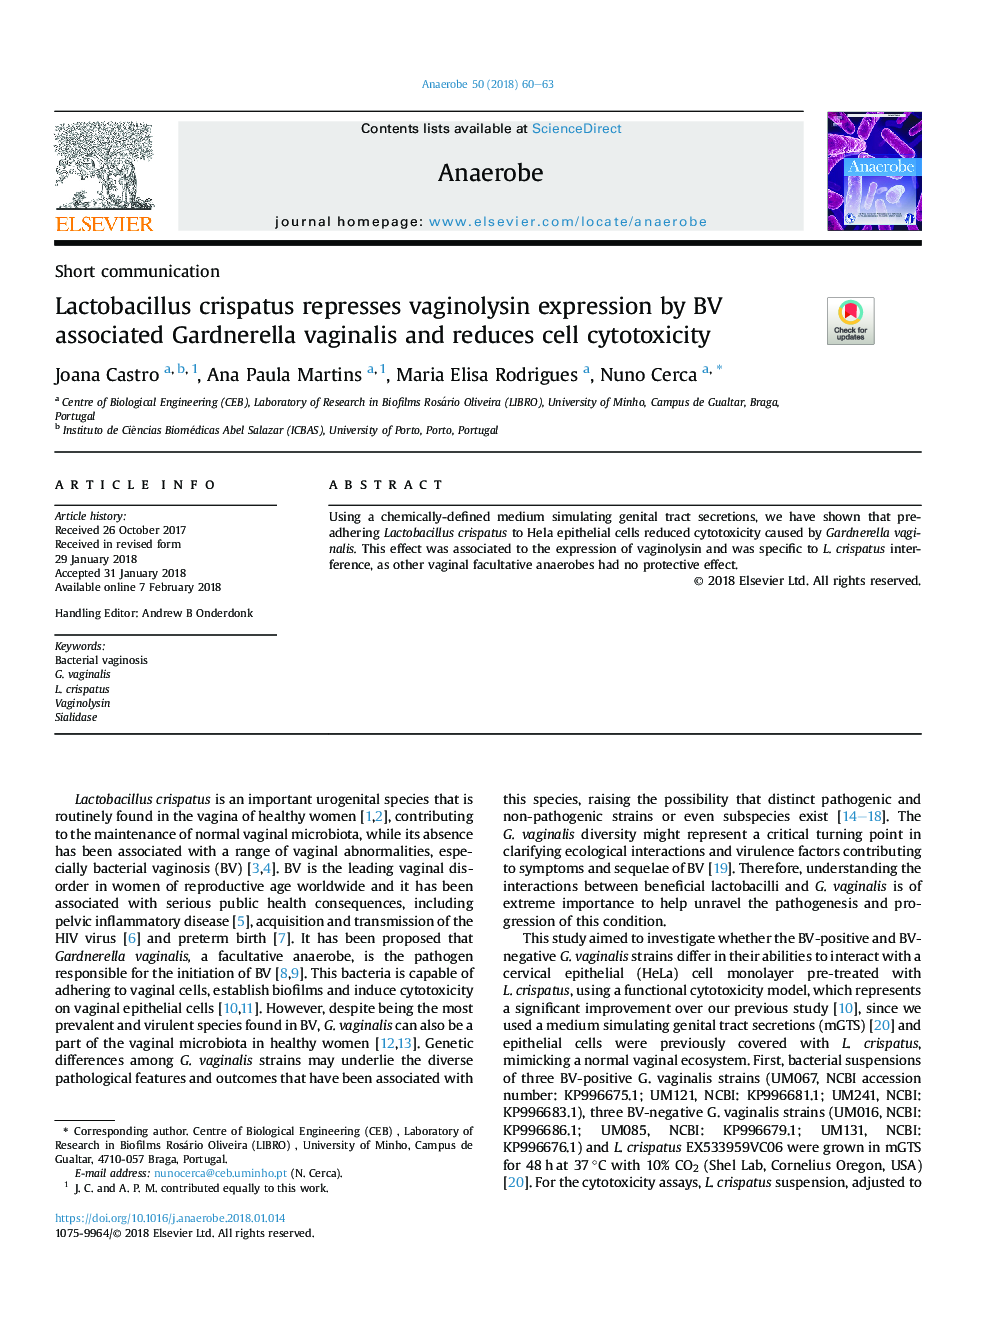 Lactobacillus crispatus represses vaginolysin expression by BV associated Gardnerella vaginalis and reduces cell cytotoxicity